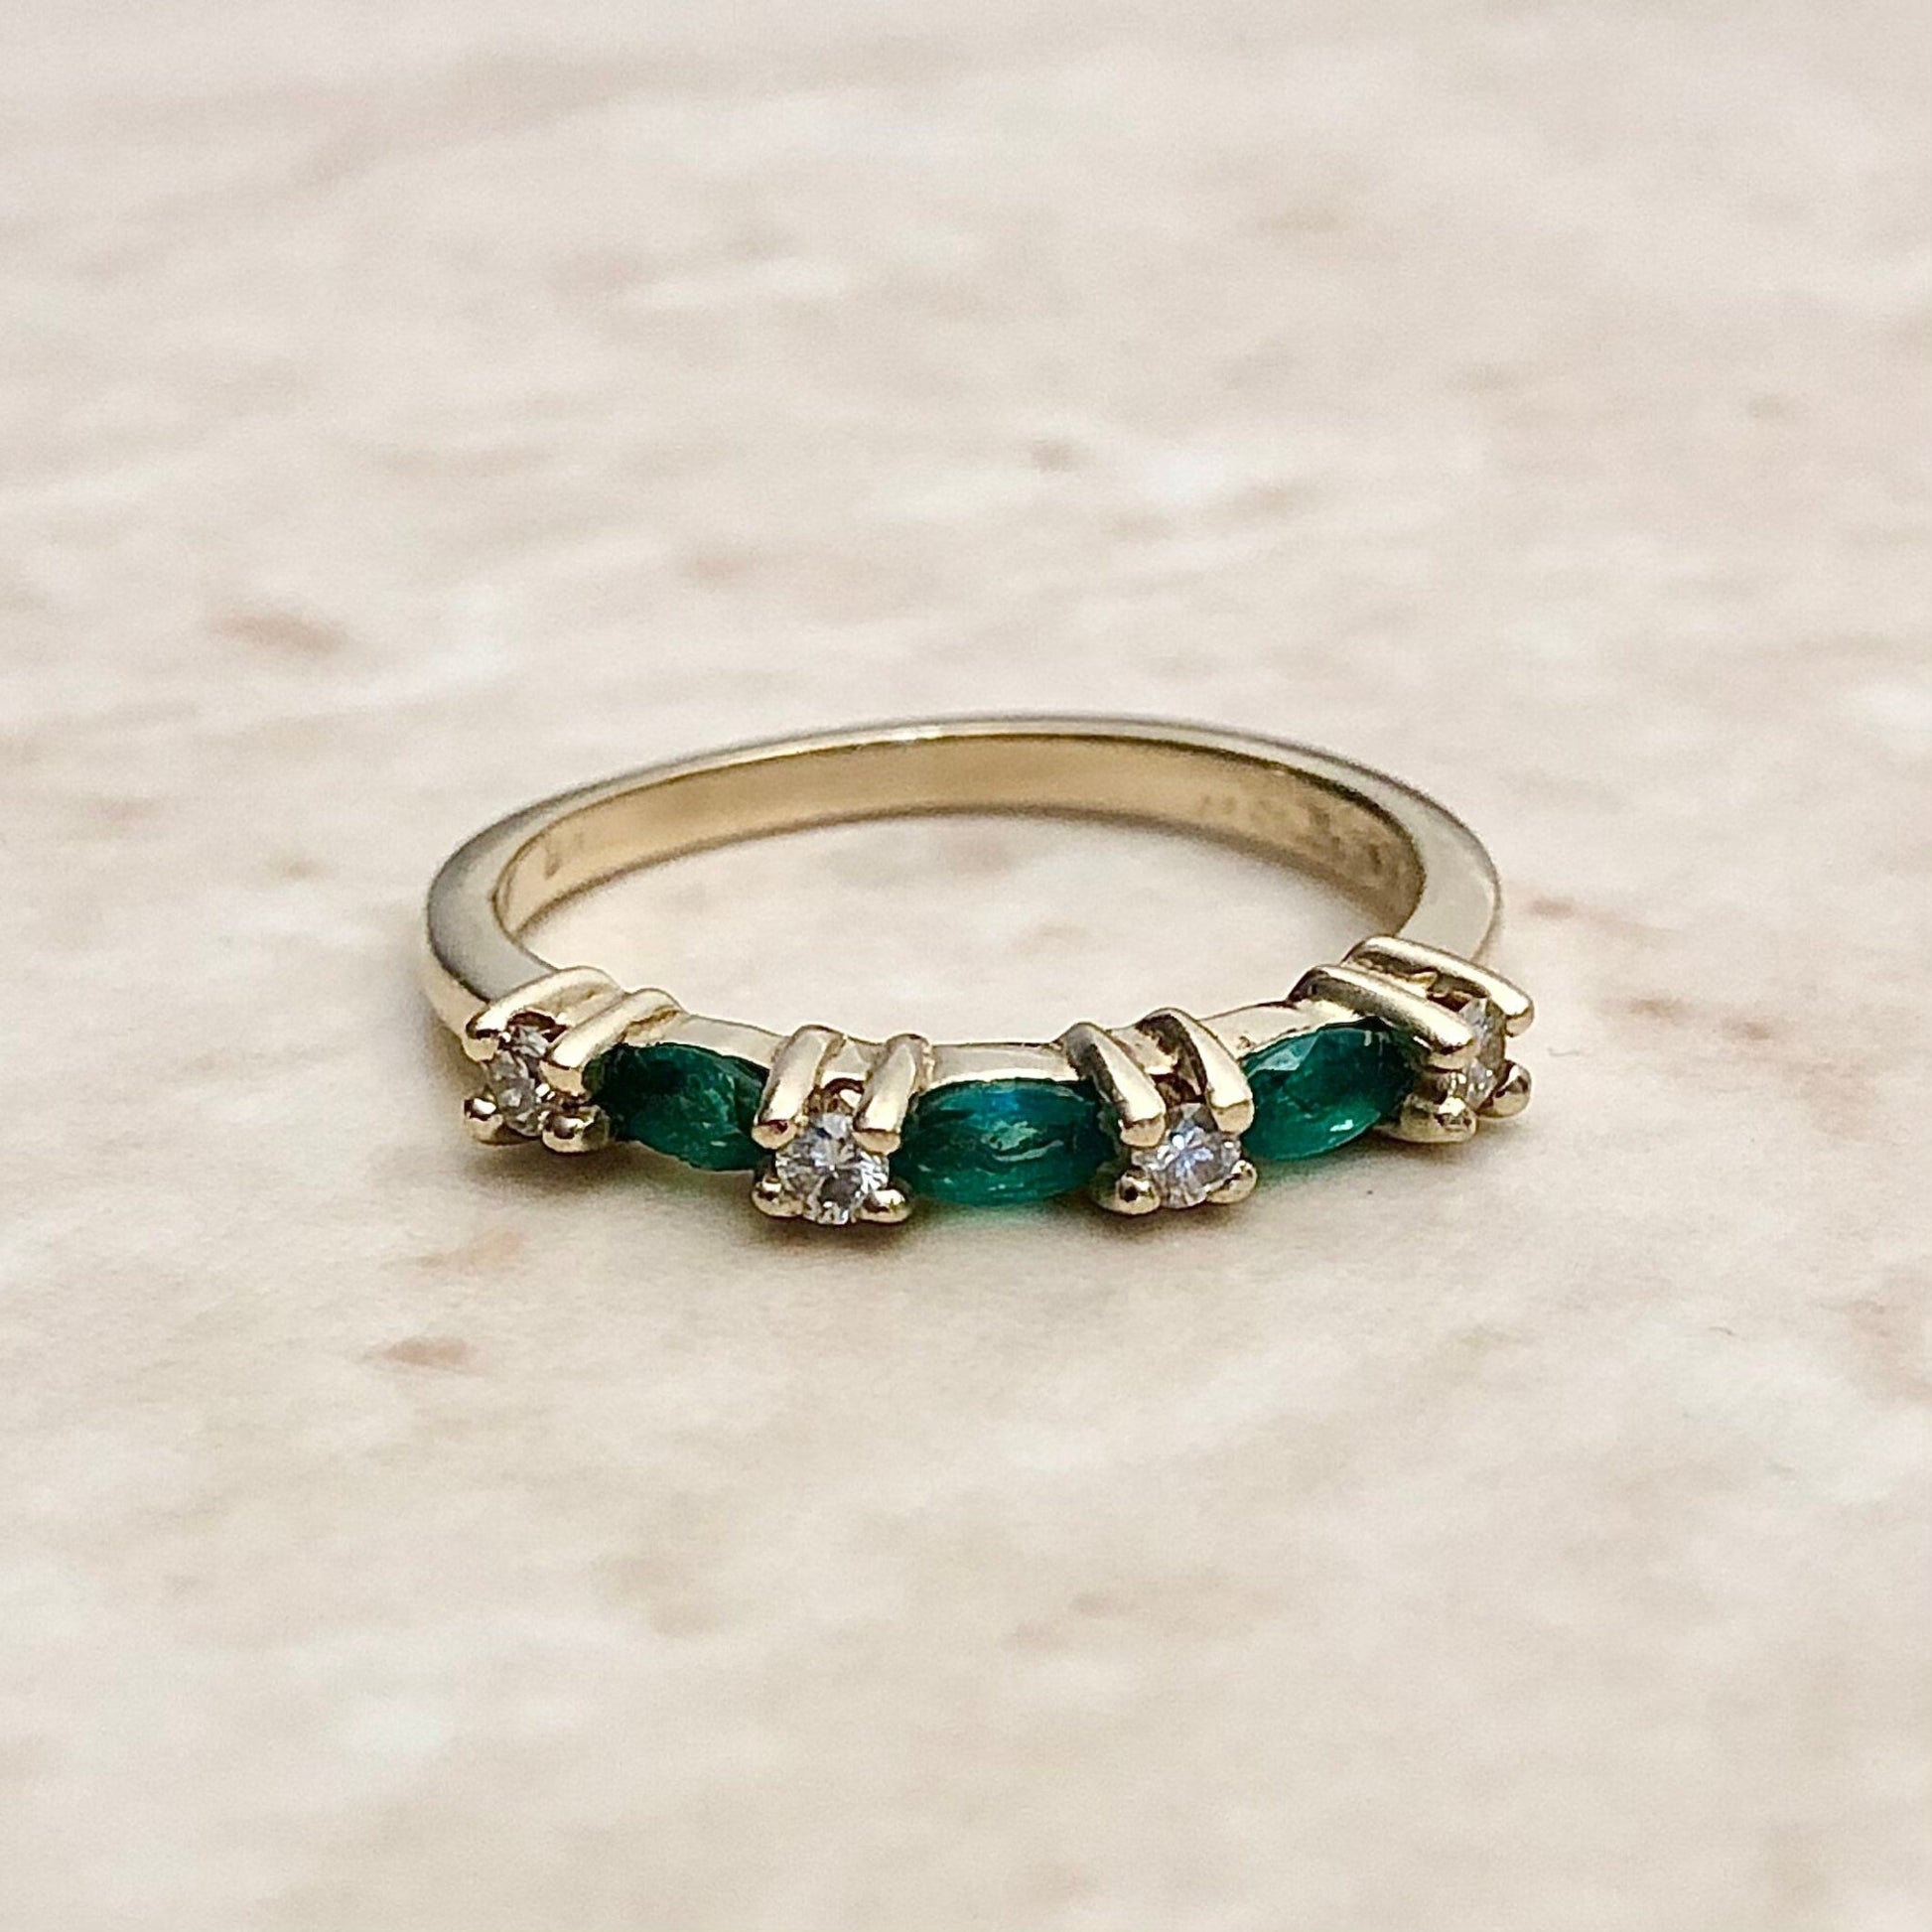 Vintage 14K Natural Marquise Emerald & Diamond Ring - Yellow Gold - Genuine Gemstone - Size 5.5